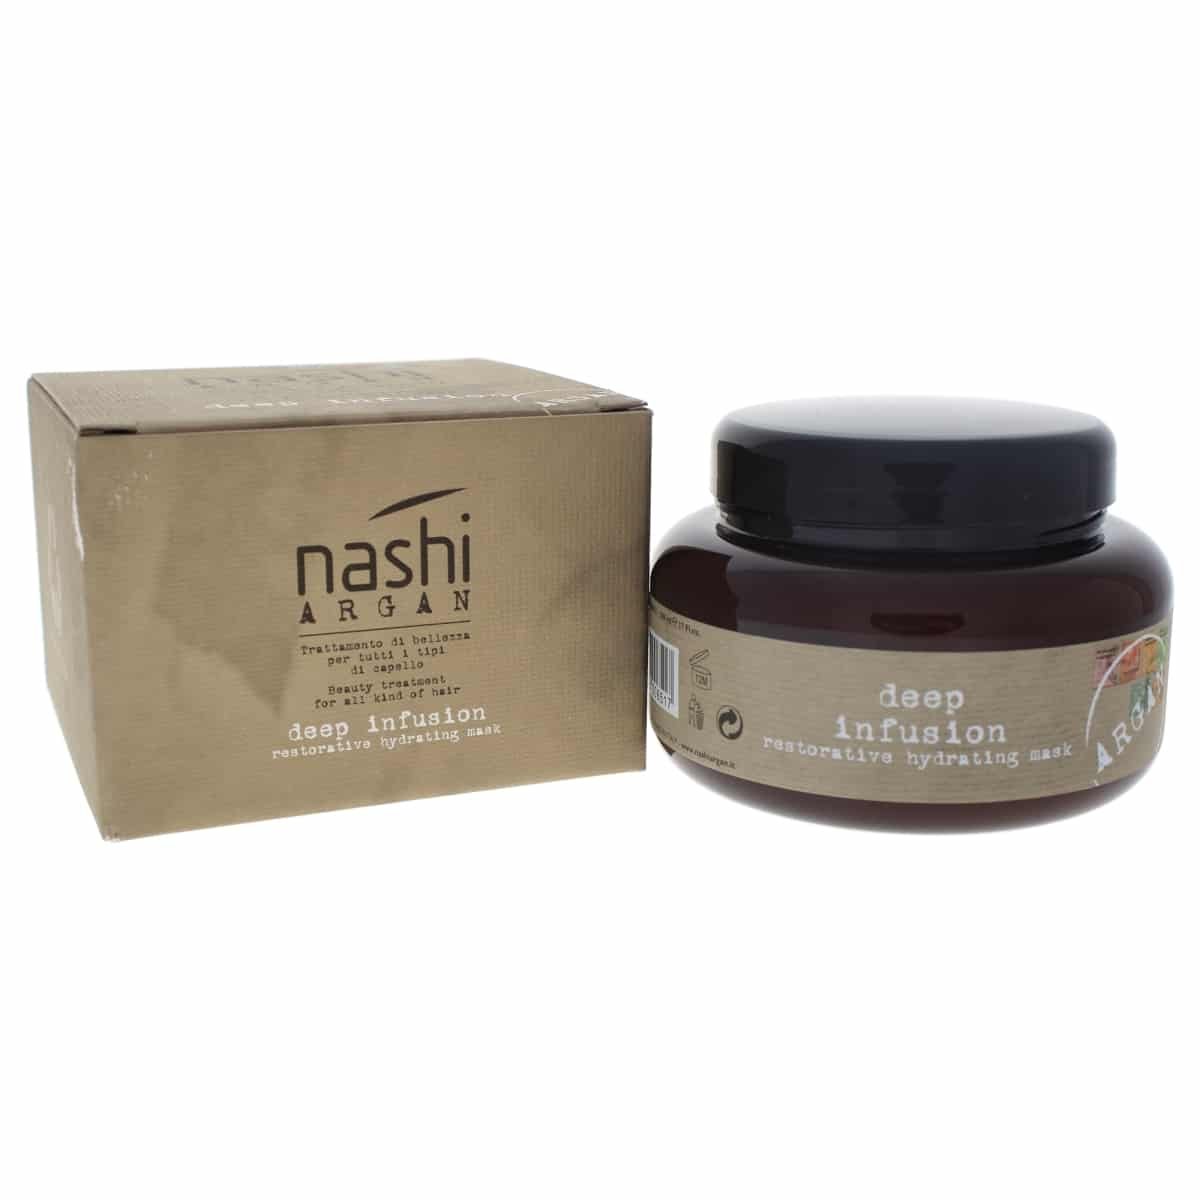 Nashi Deep Infusion Hair Treatment 500ml